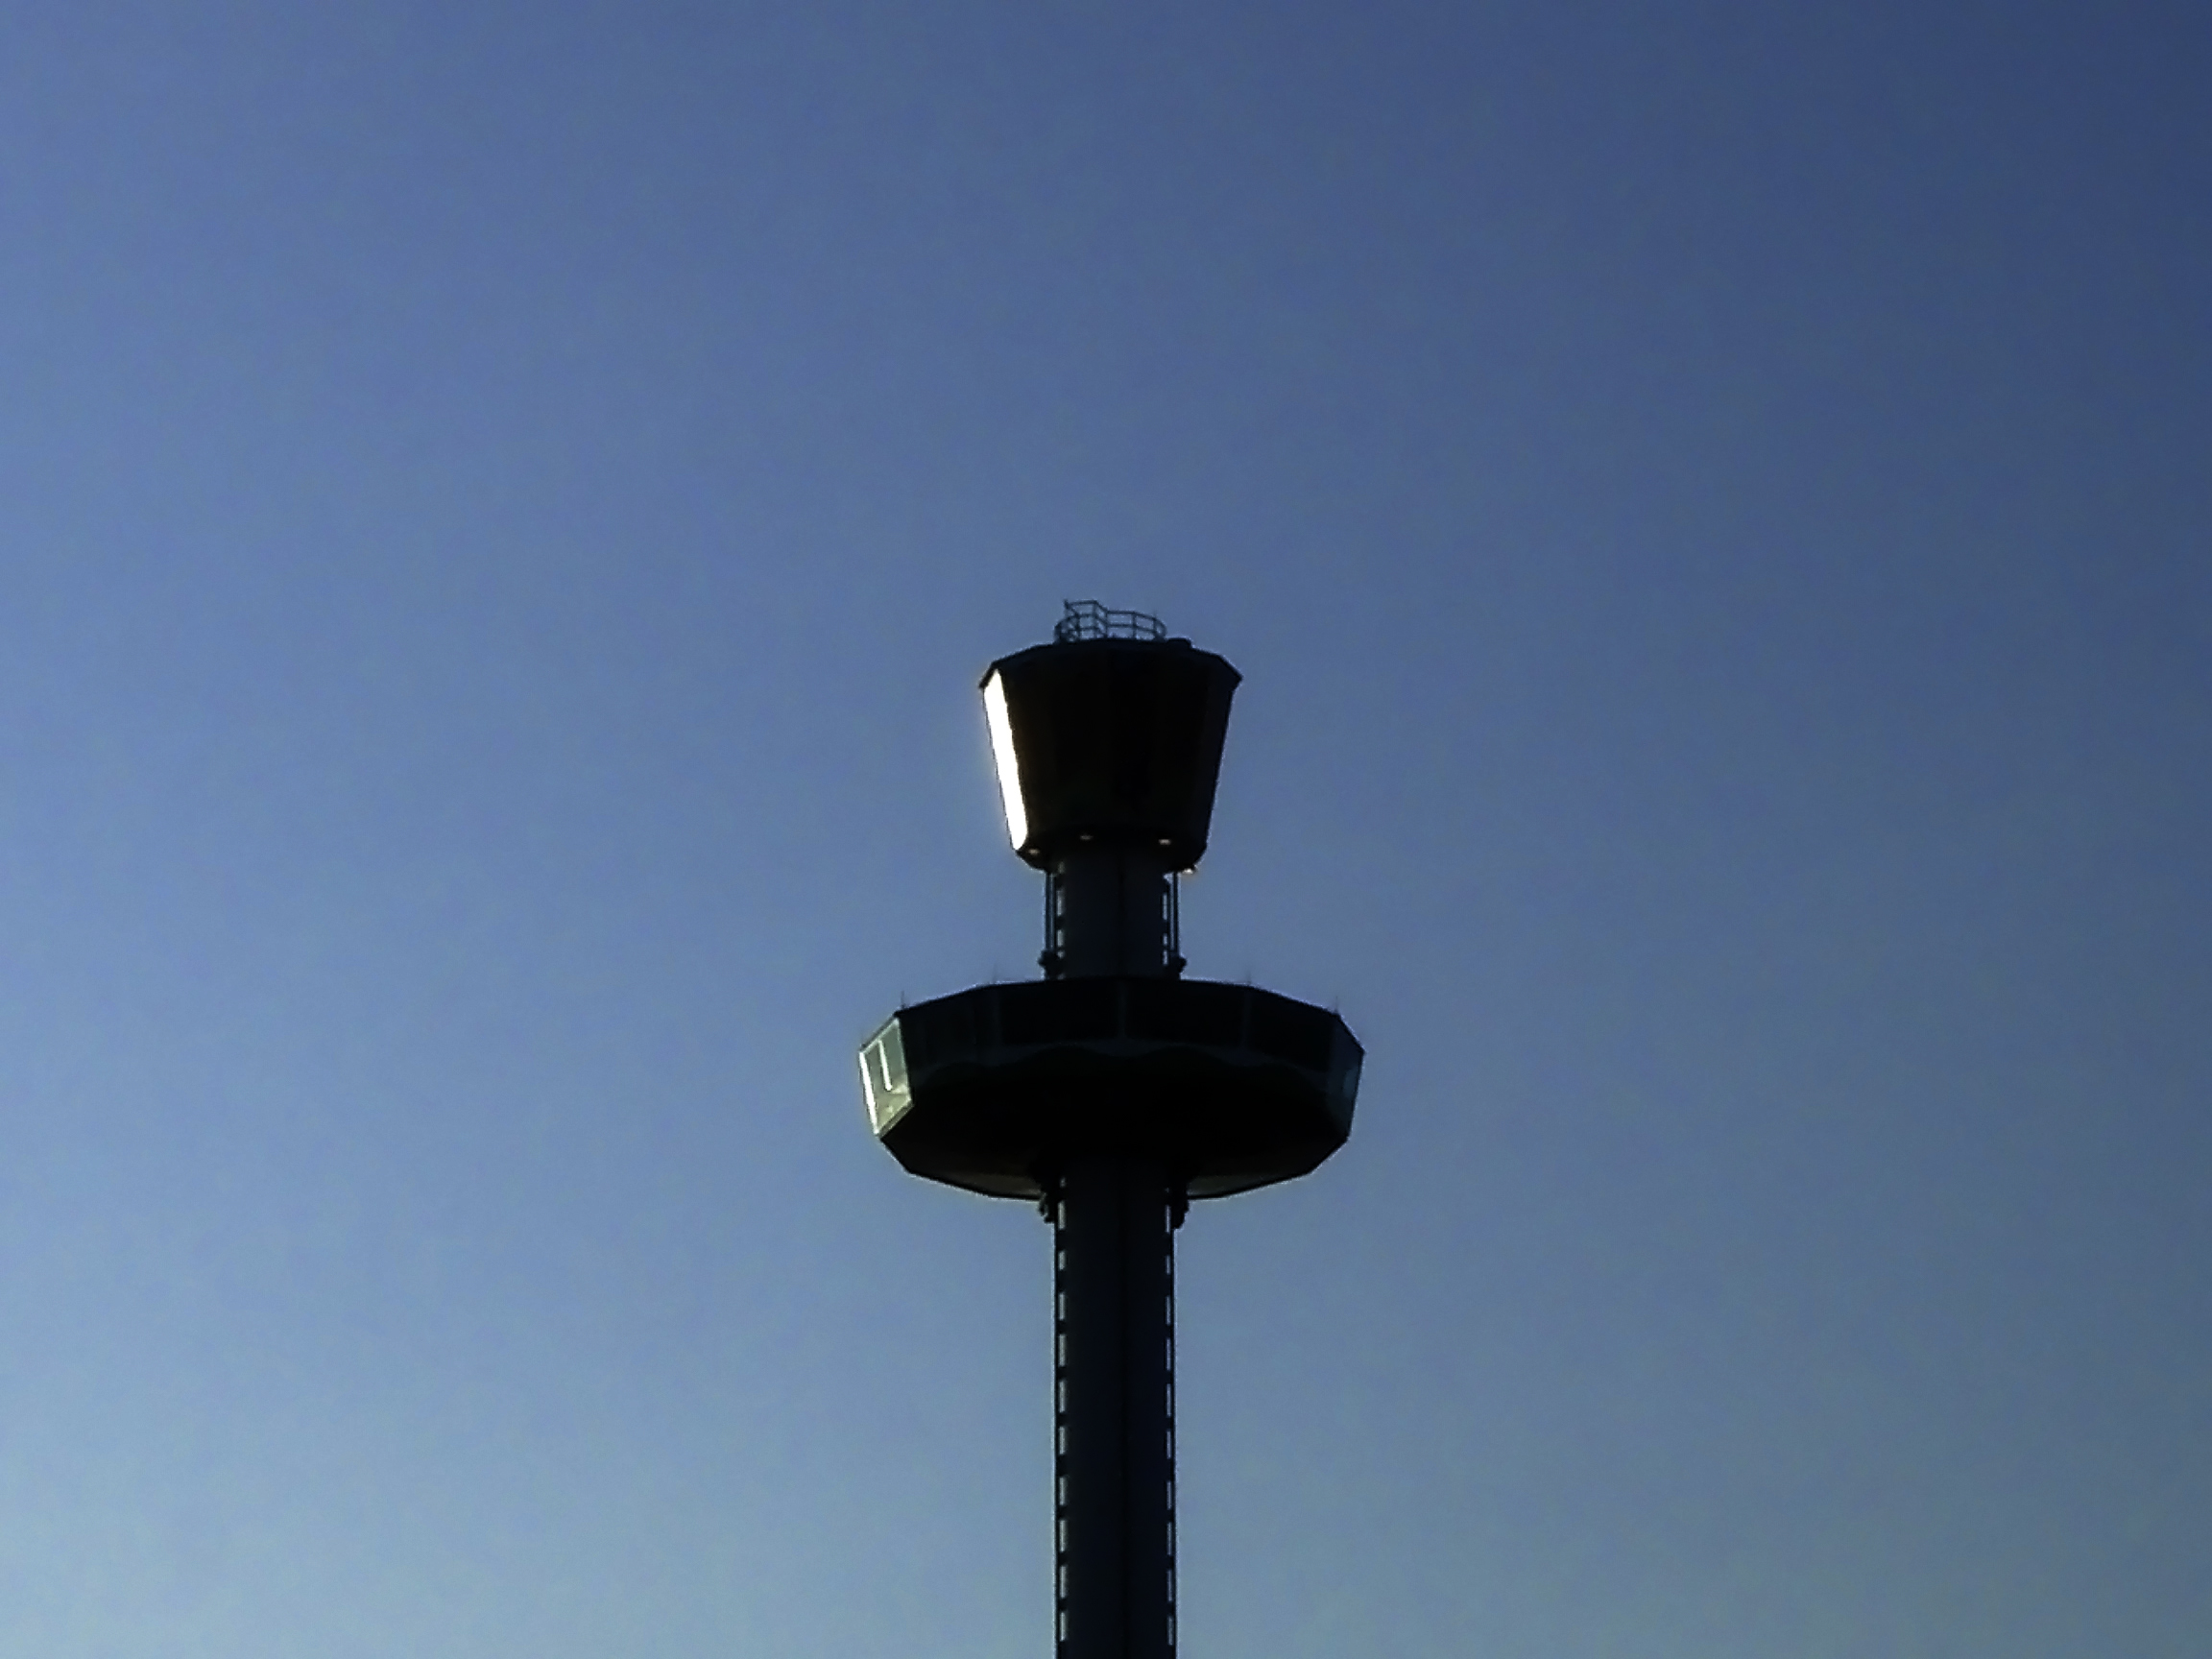 Ocean park tower photo